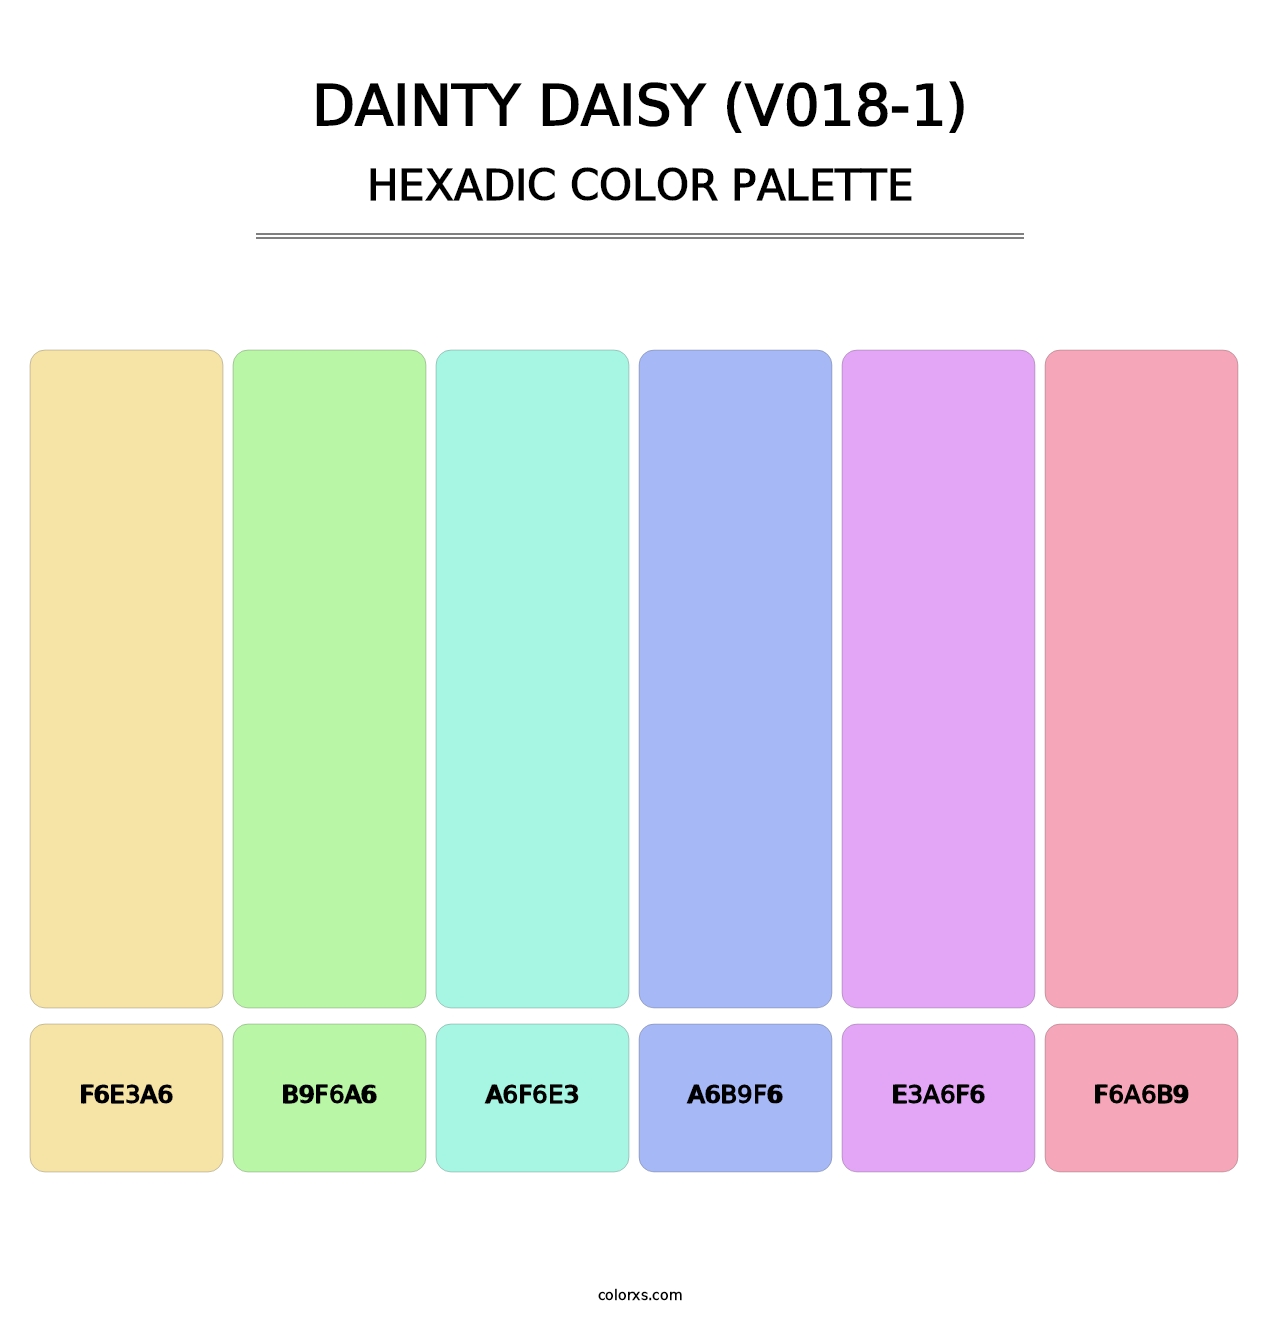 Dainty Daisy (V018-1) - Hexadic Color Palette